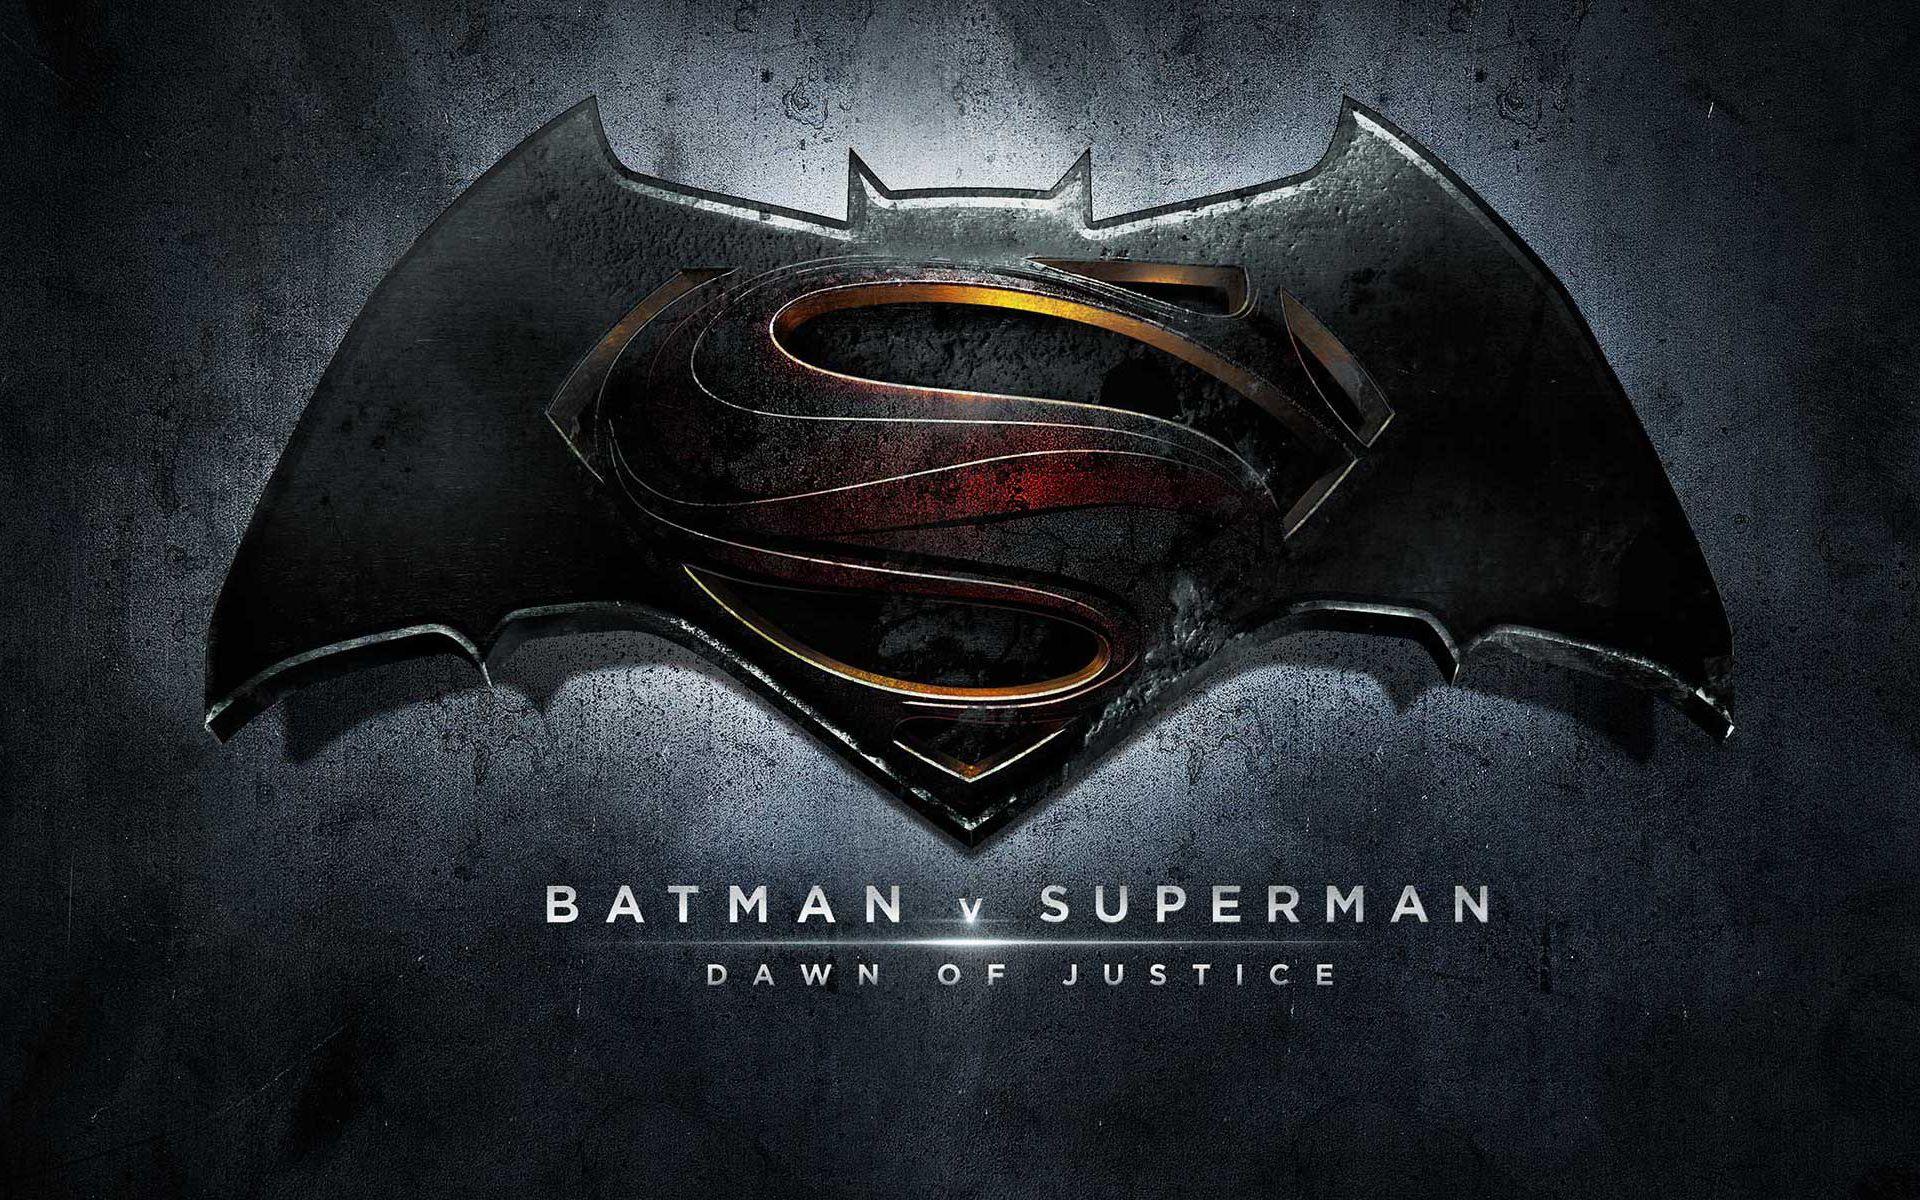 Batman v Superman: Dawn of Justice Full HD Wallpapers and